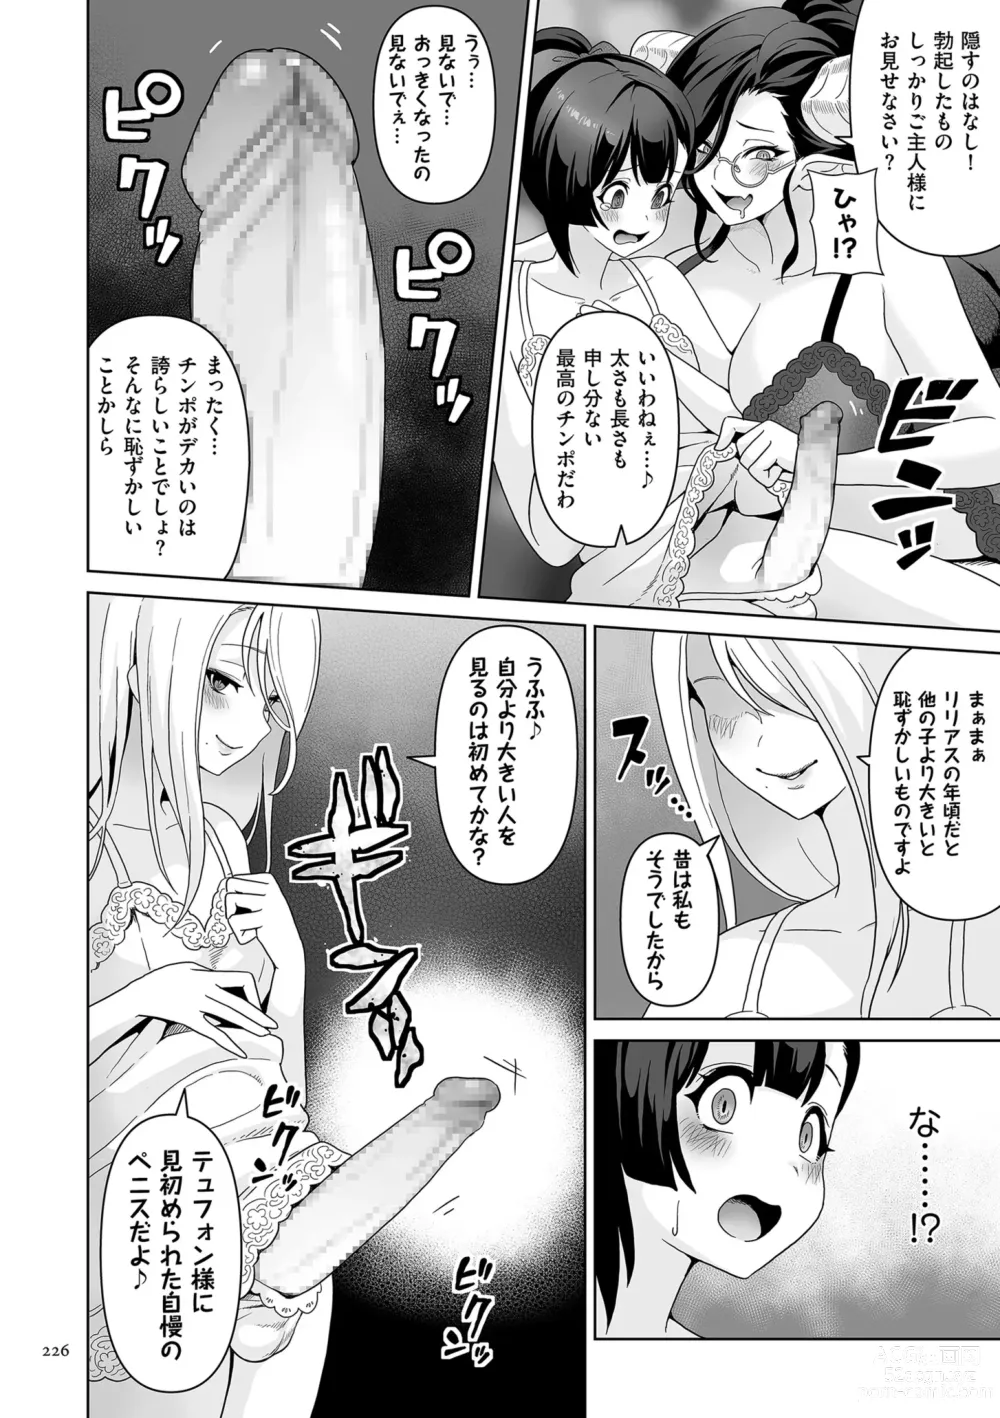 Page 226 of manga Succubus Kingdom